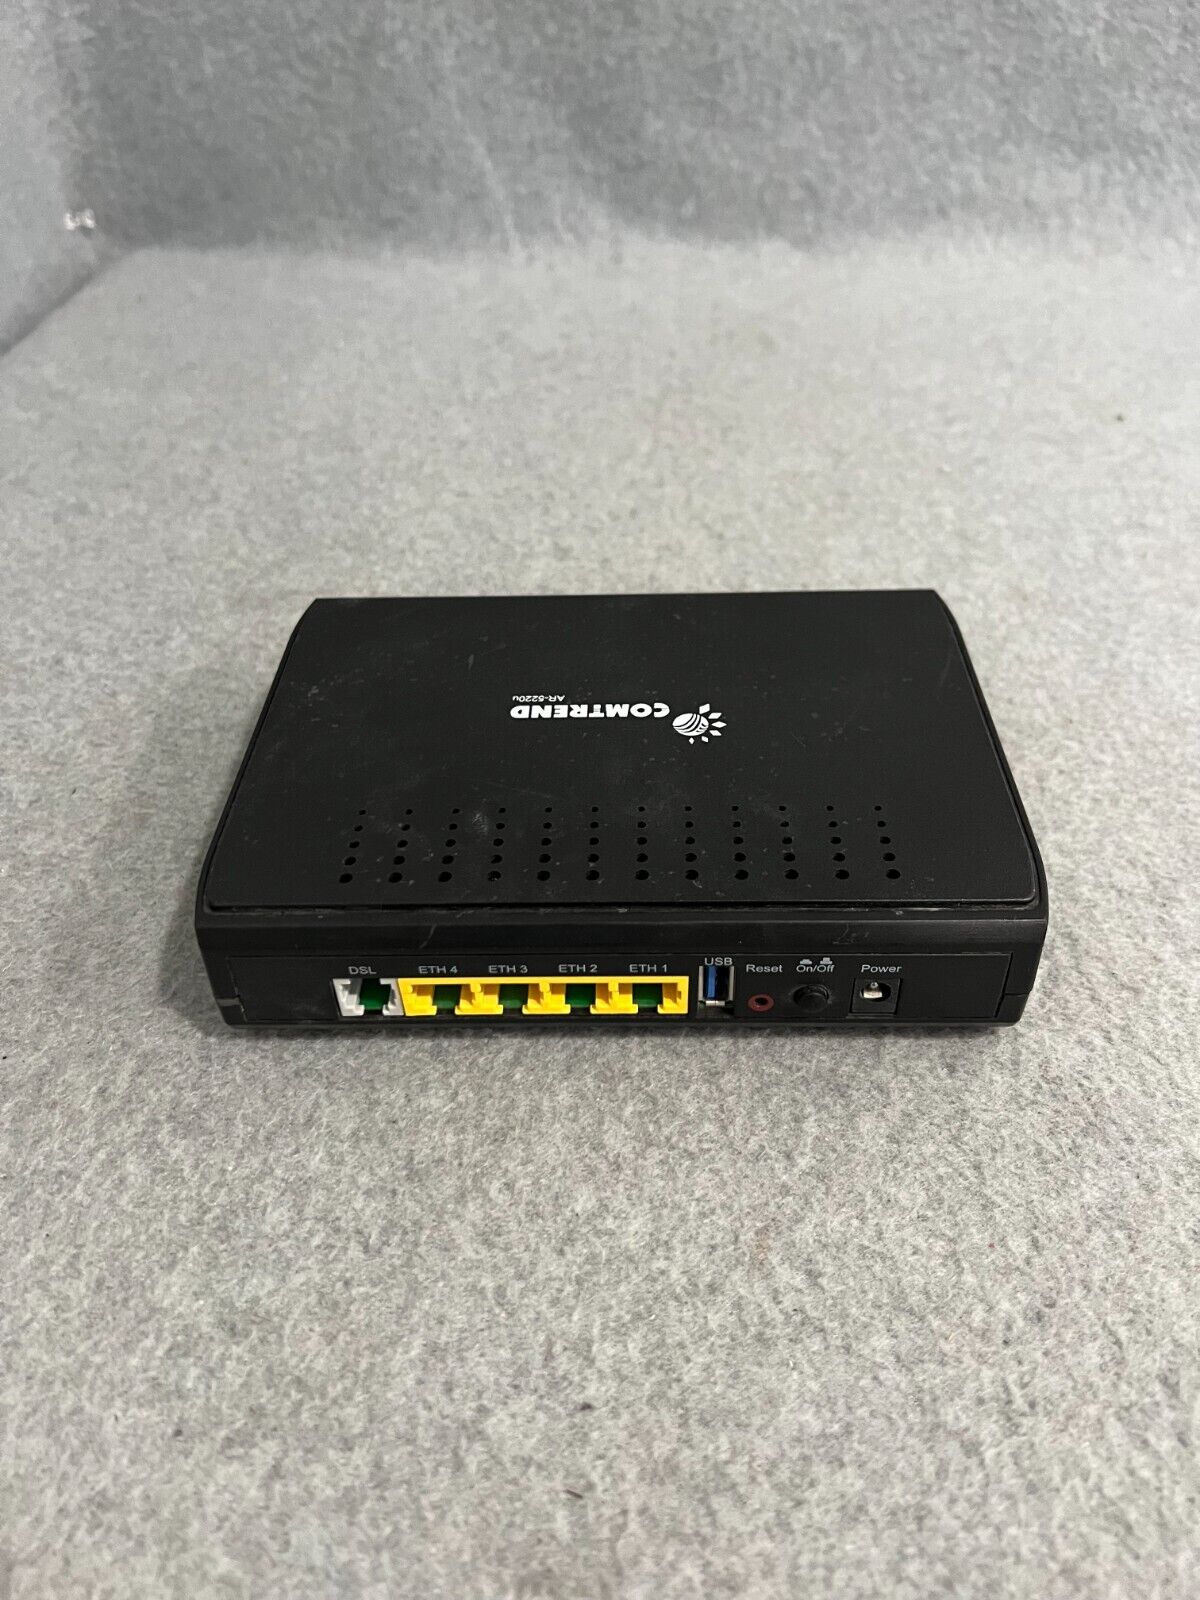 Comtrend ADSL2+Router Model AR-5220U